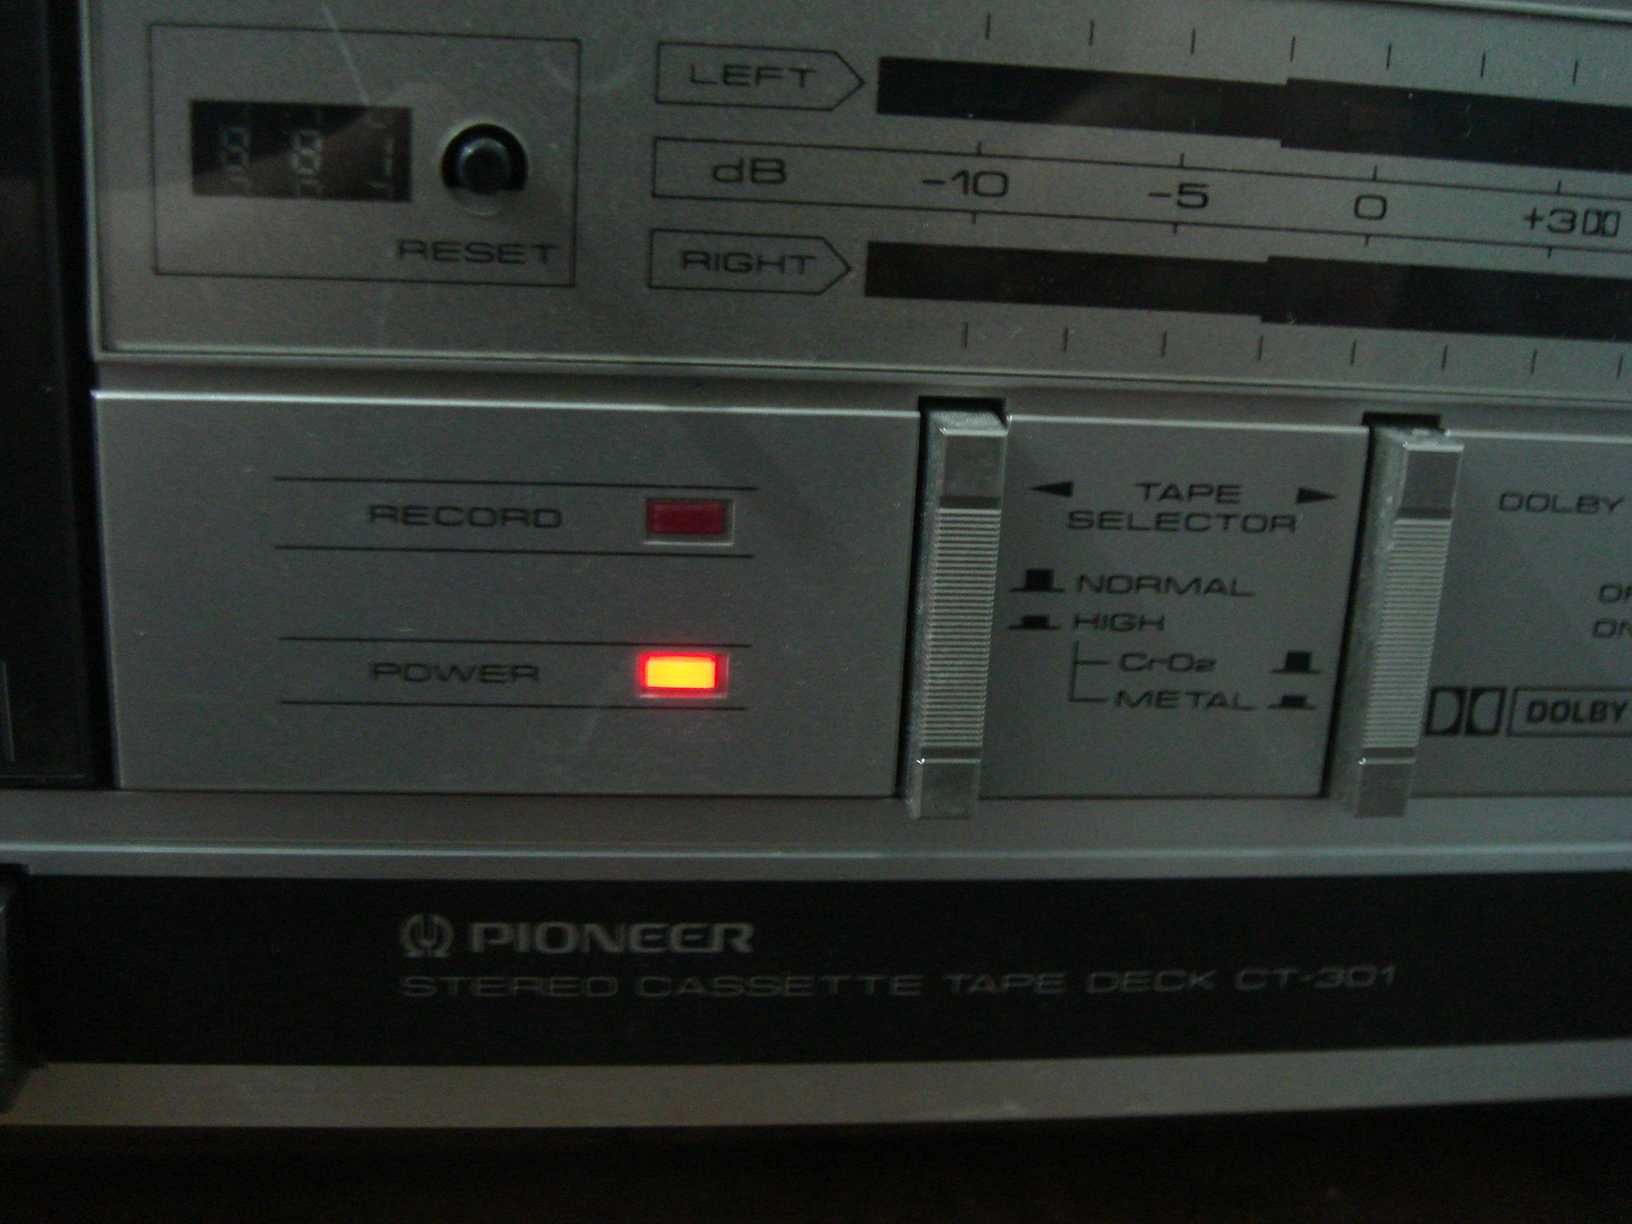 SANYO RD 220 Stereo Cassette Tape Deck 1983 Deck-uri Sony JVC Teac etc